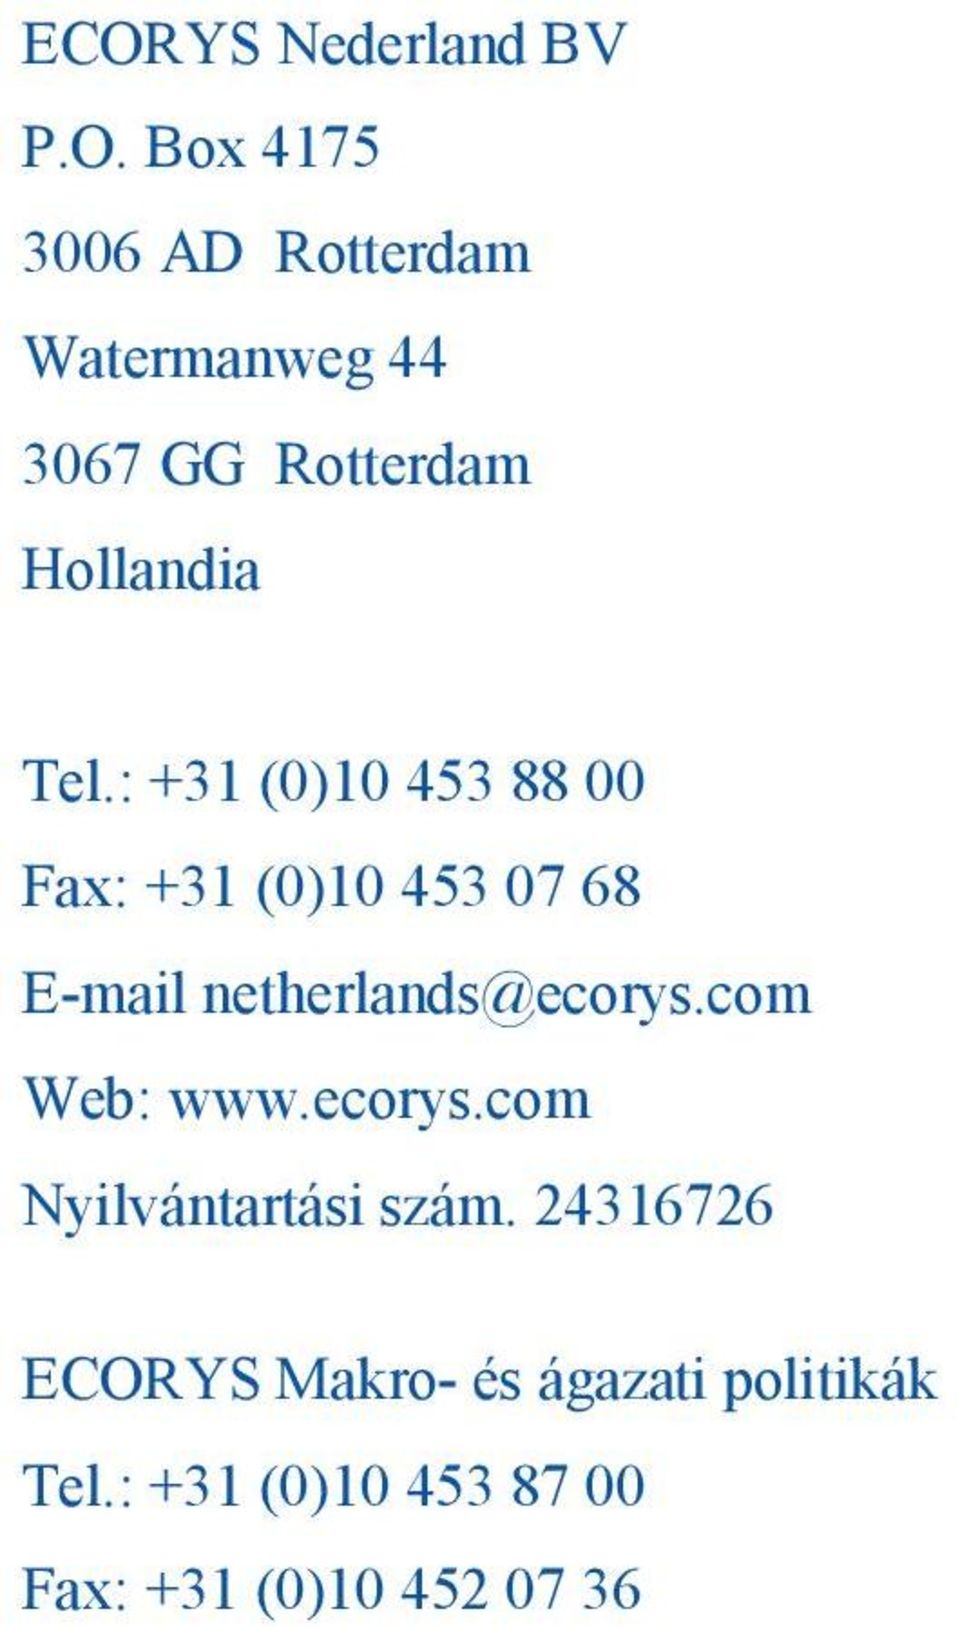 : +31 (0)10 453 88 00 Fax: +31 (0)10 453 07 68 E-mail netherlands@ecorys.